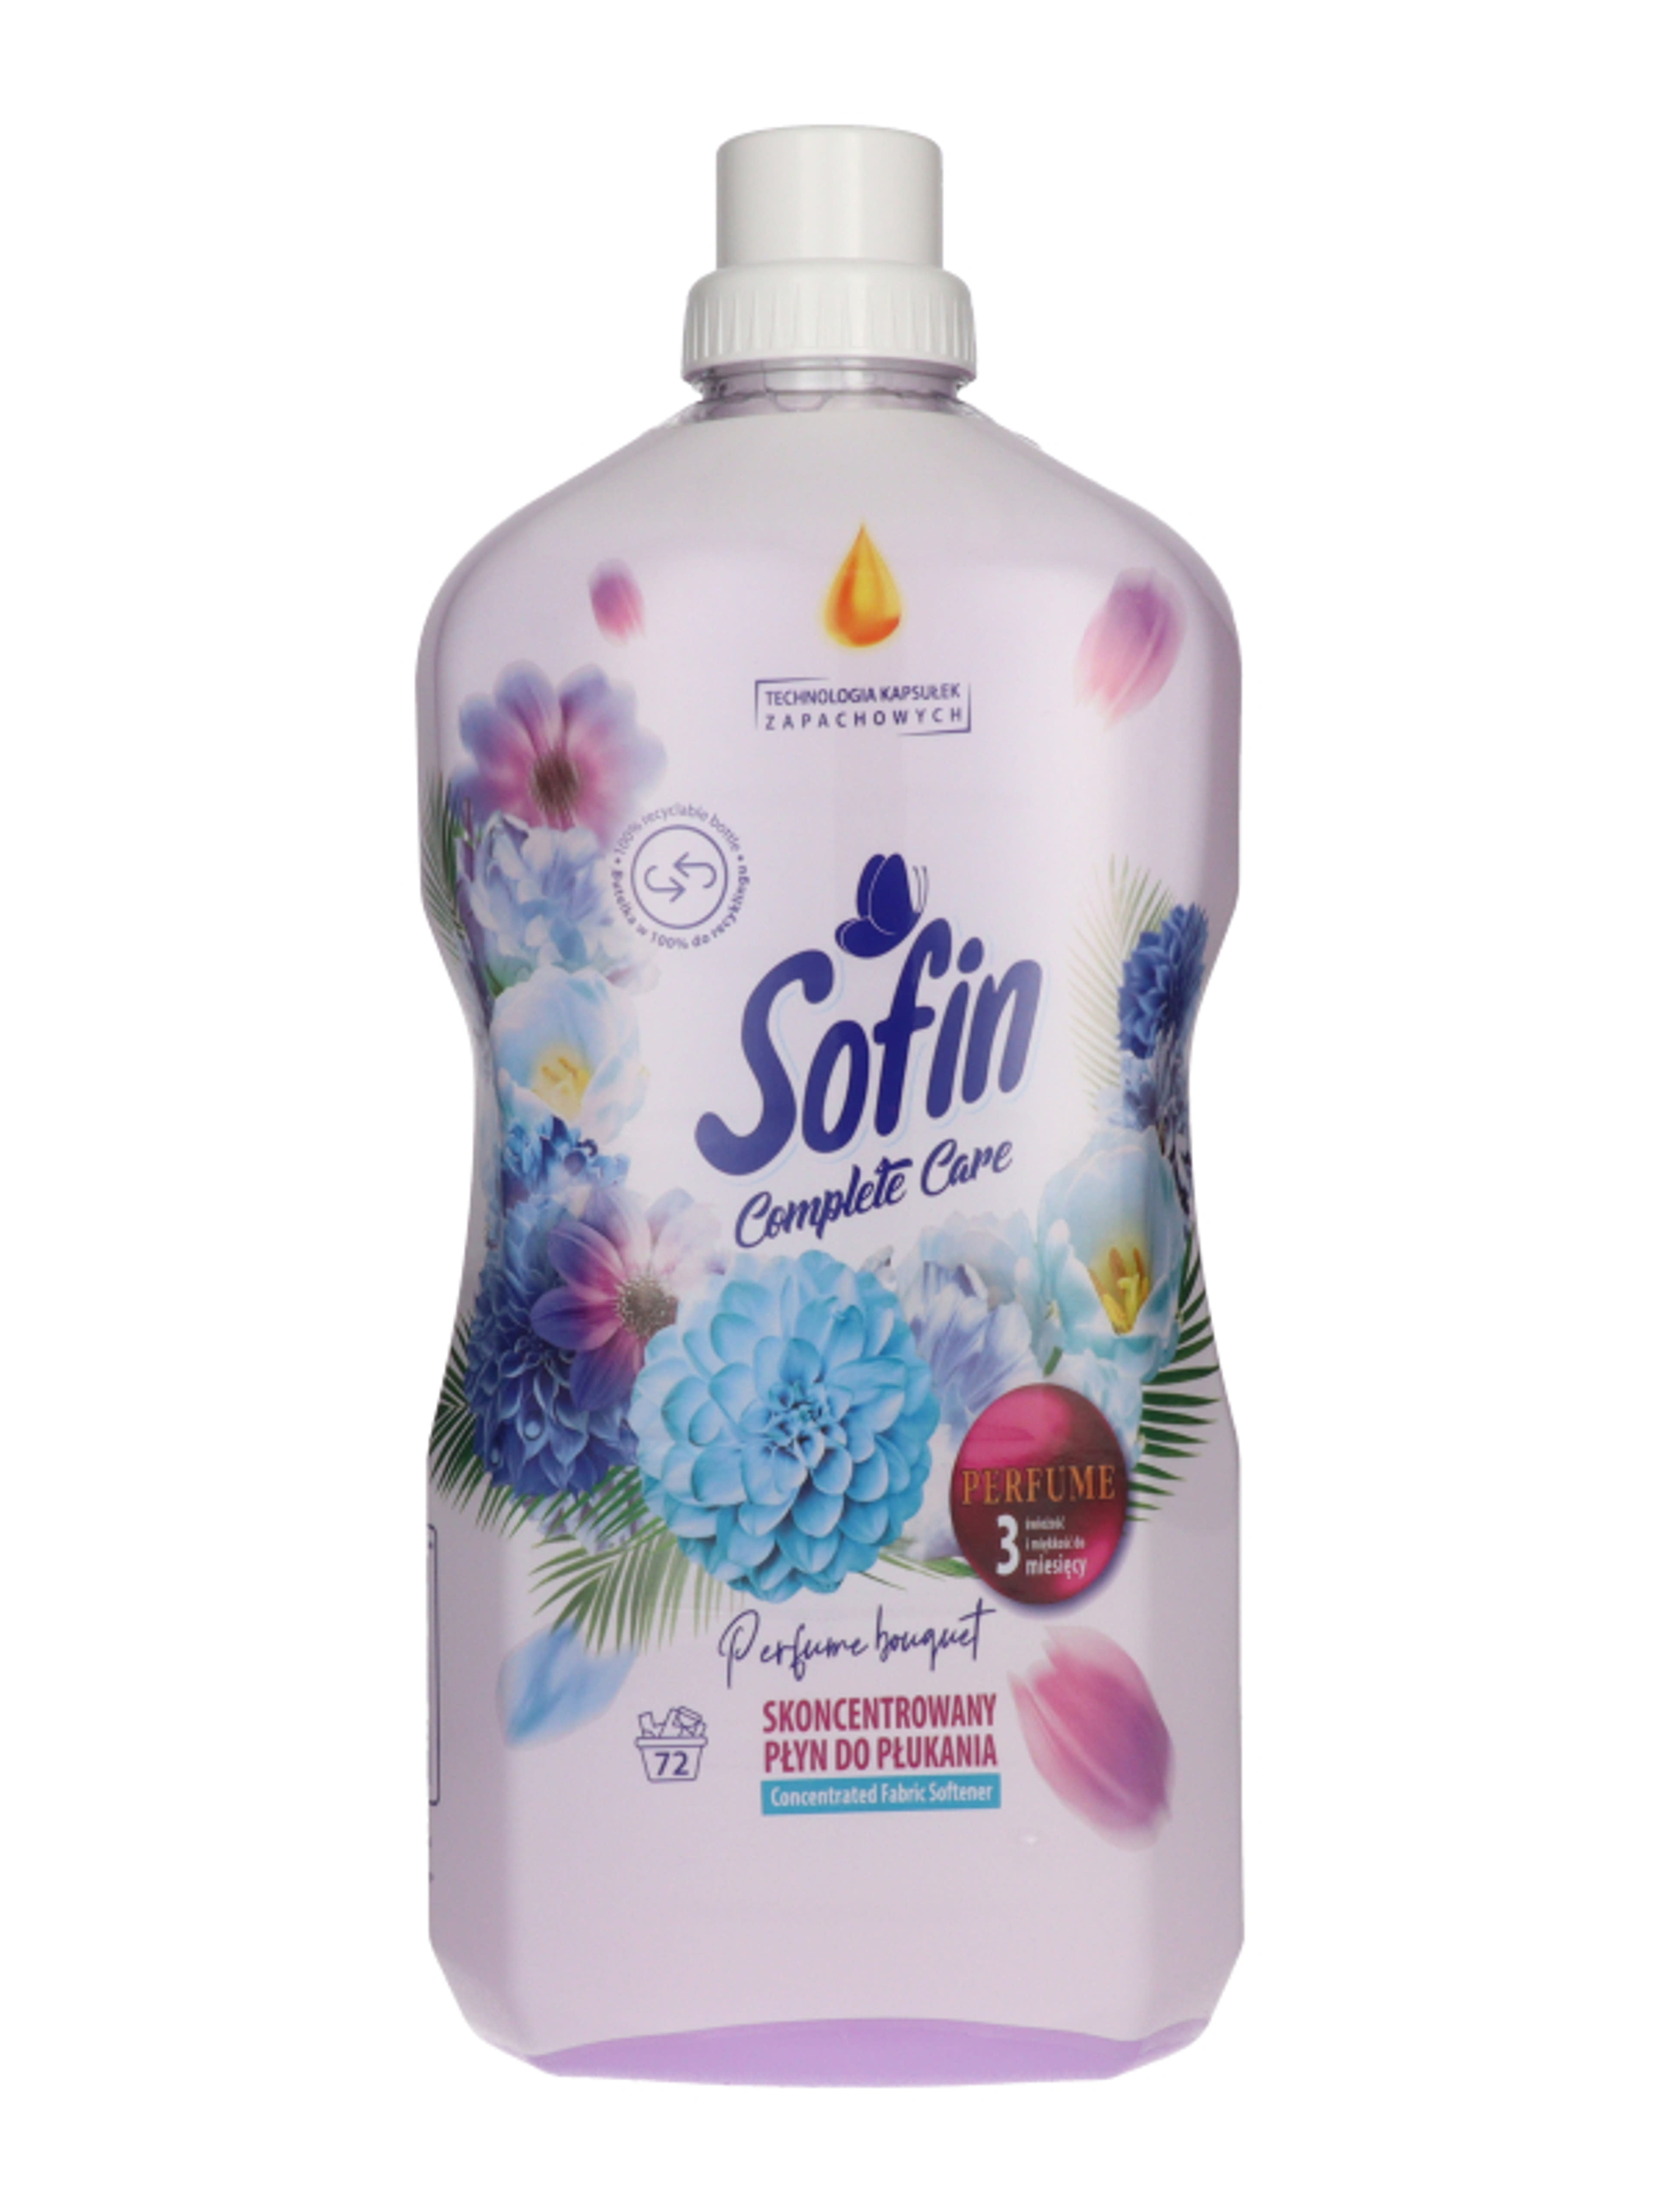 Sofin Complete Care&Perfume Bouquet öblítő - 1800 ml